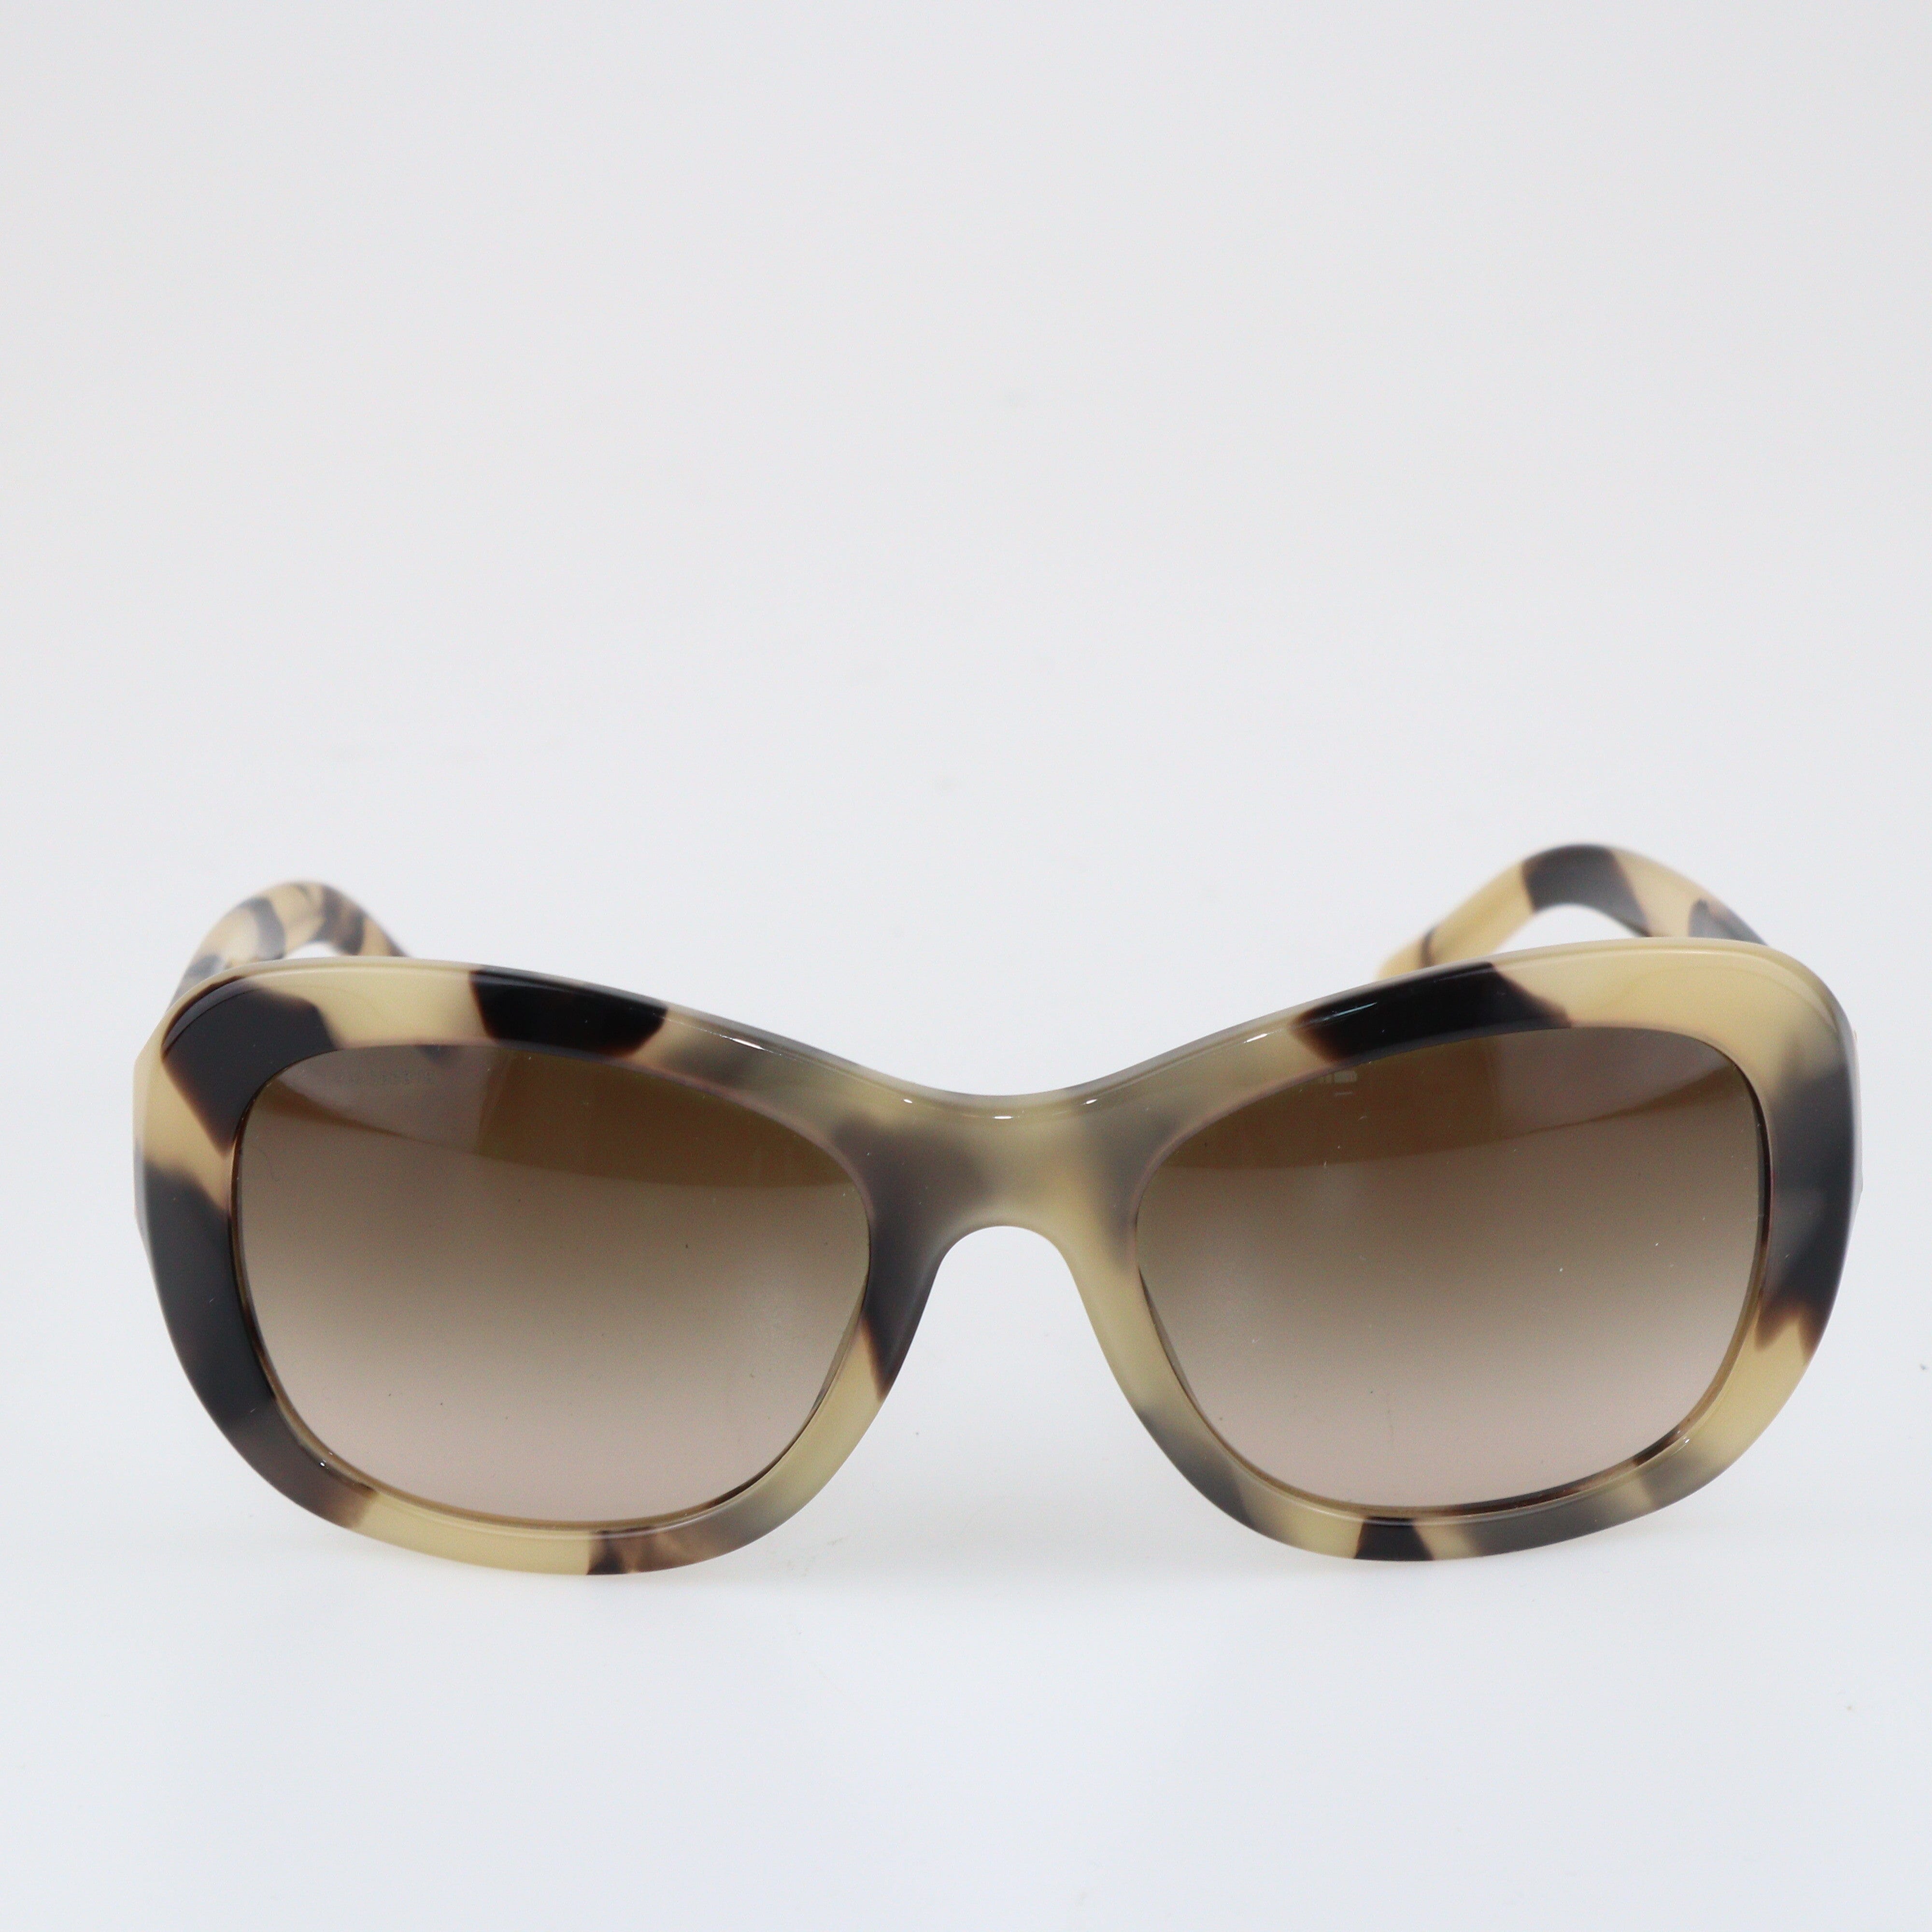 Cream/Black Sunglasses Accessories Burberry 